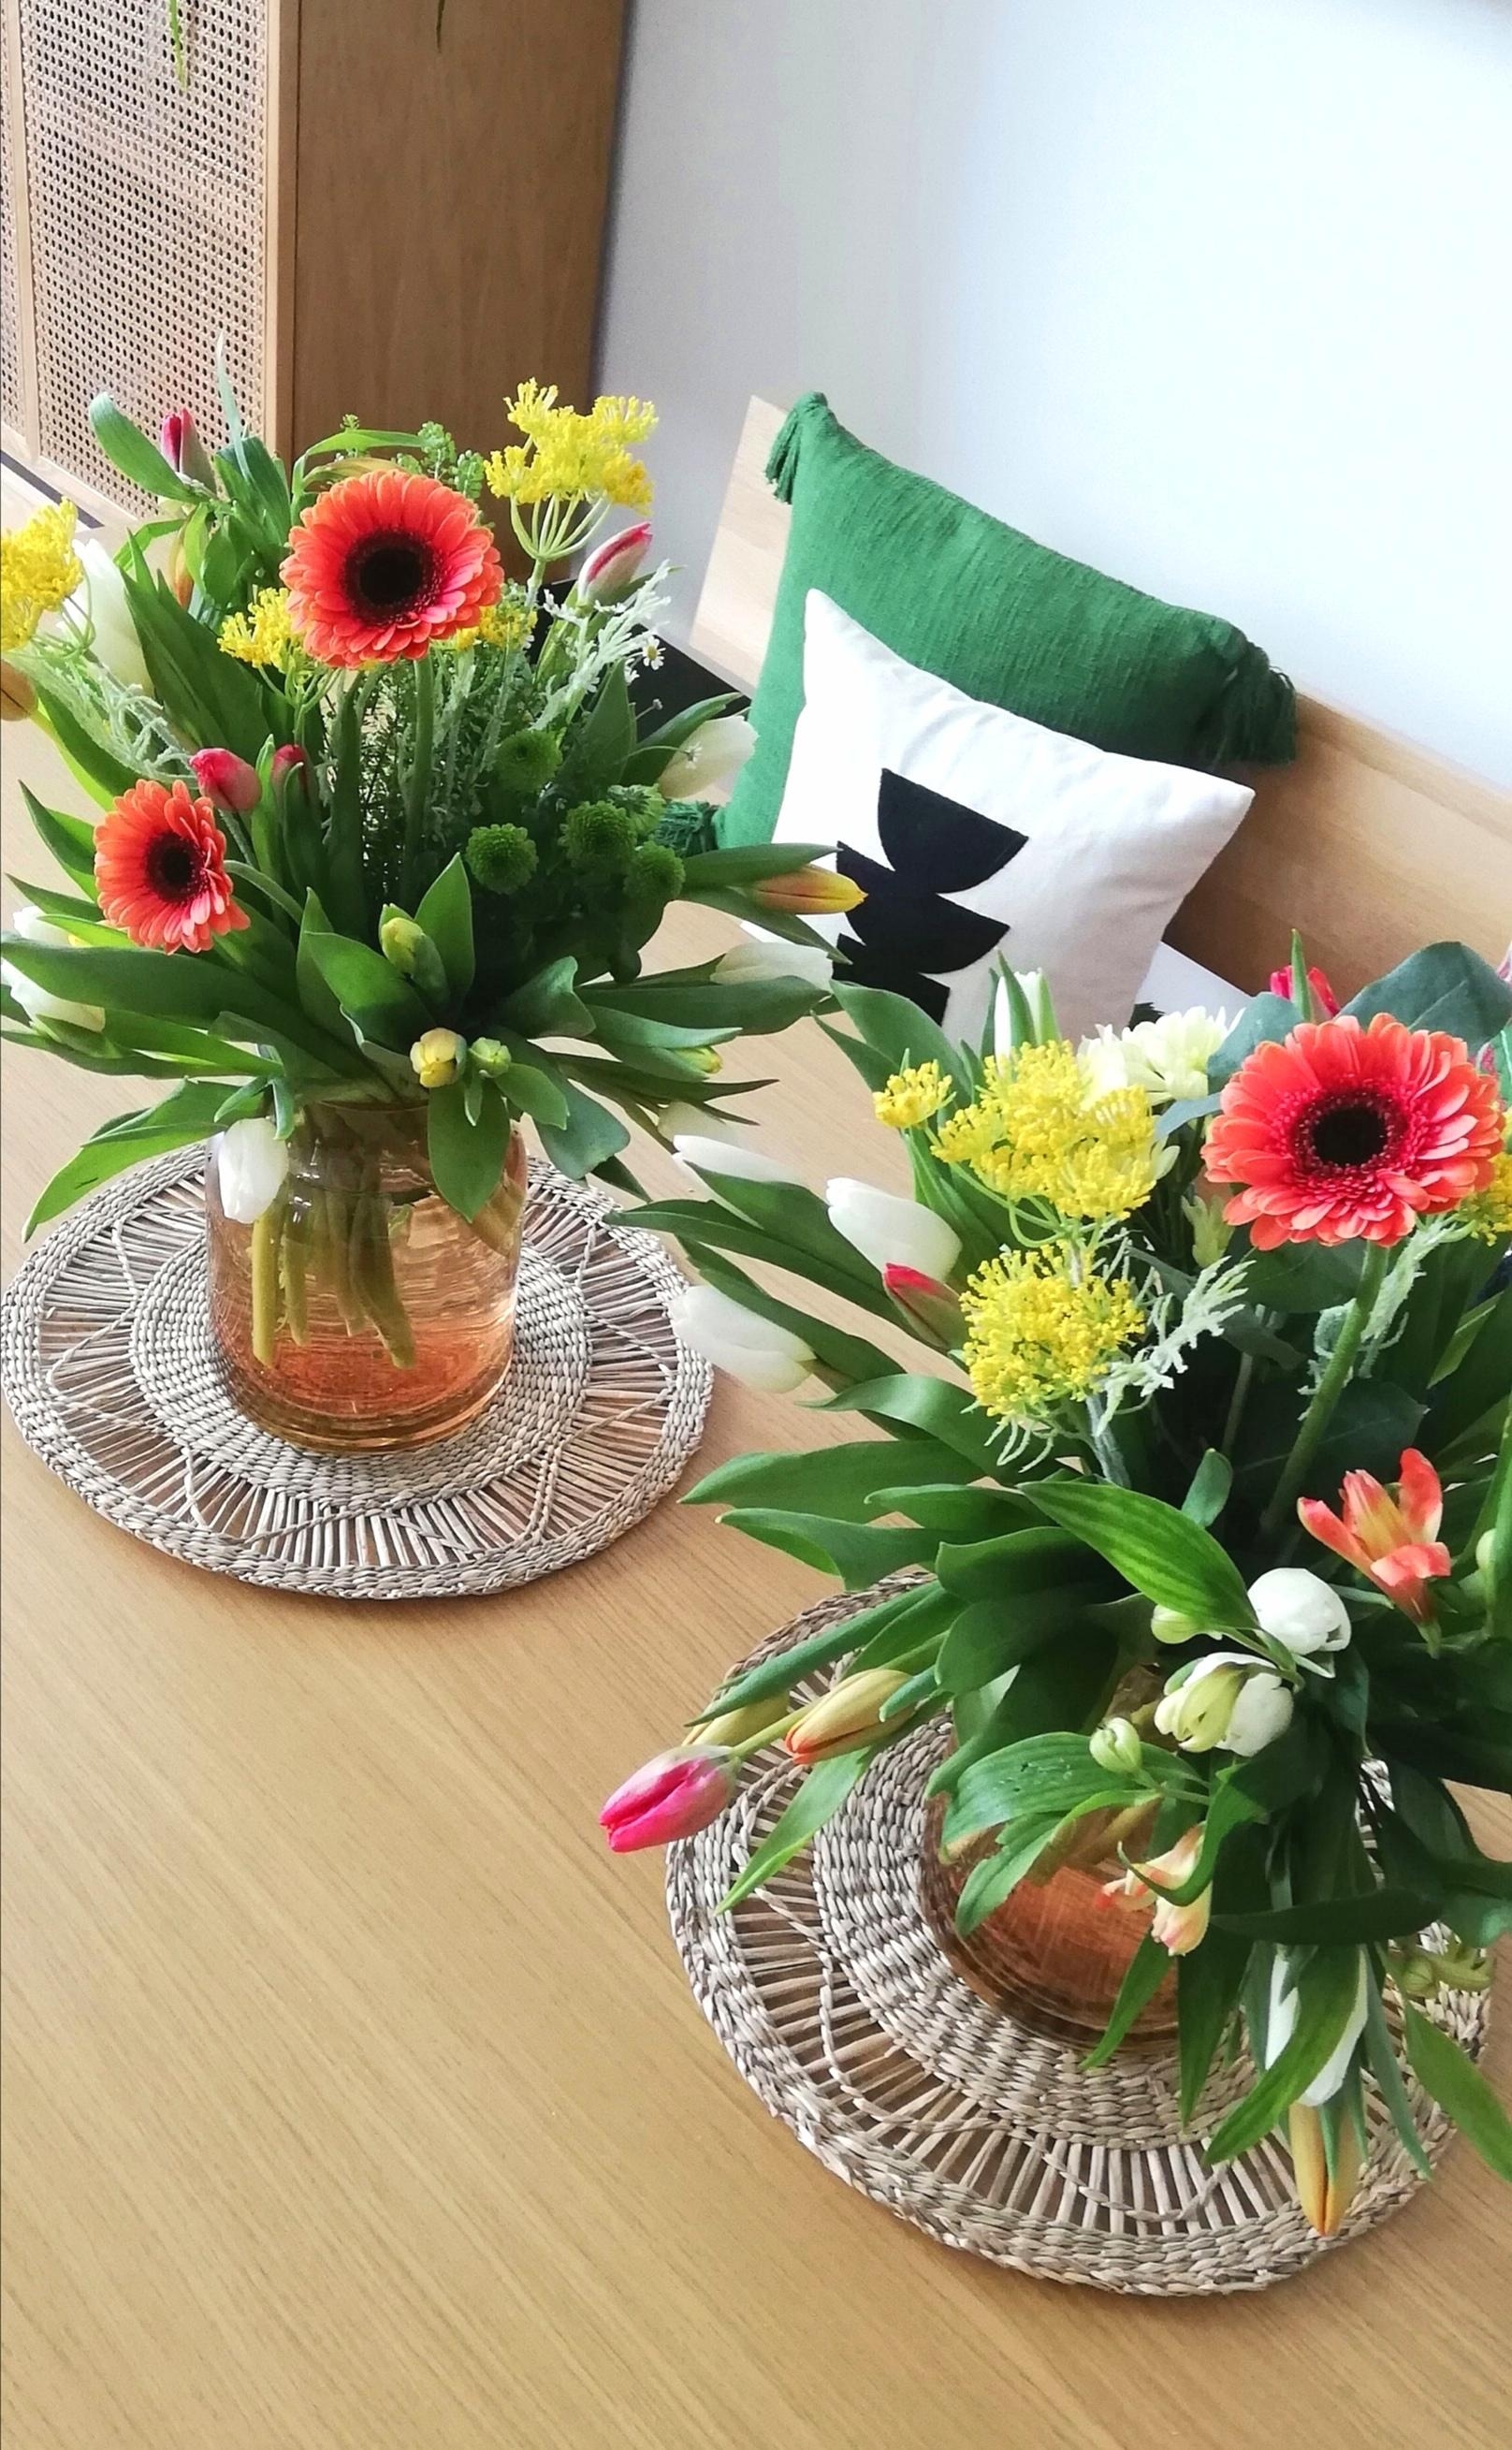 #frühlingsgefühle #flower #tulpen #blumendeko #blumenliebe #home #decor #decoration #living #cozyhome #plantslover #love